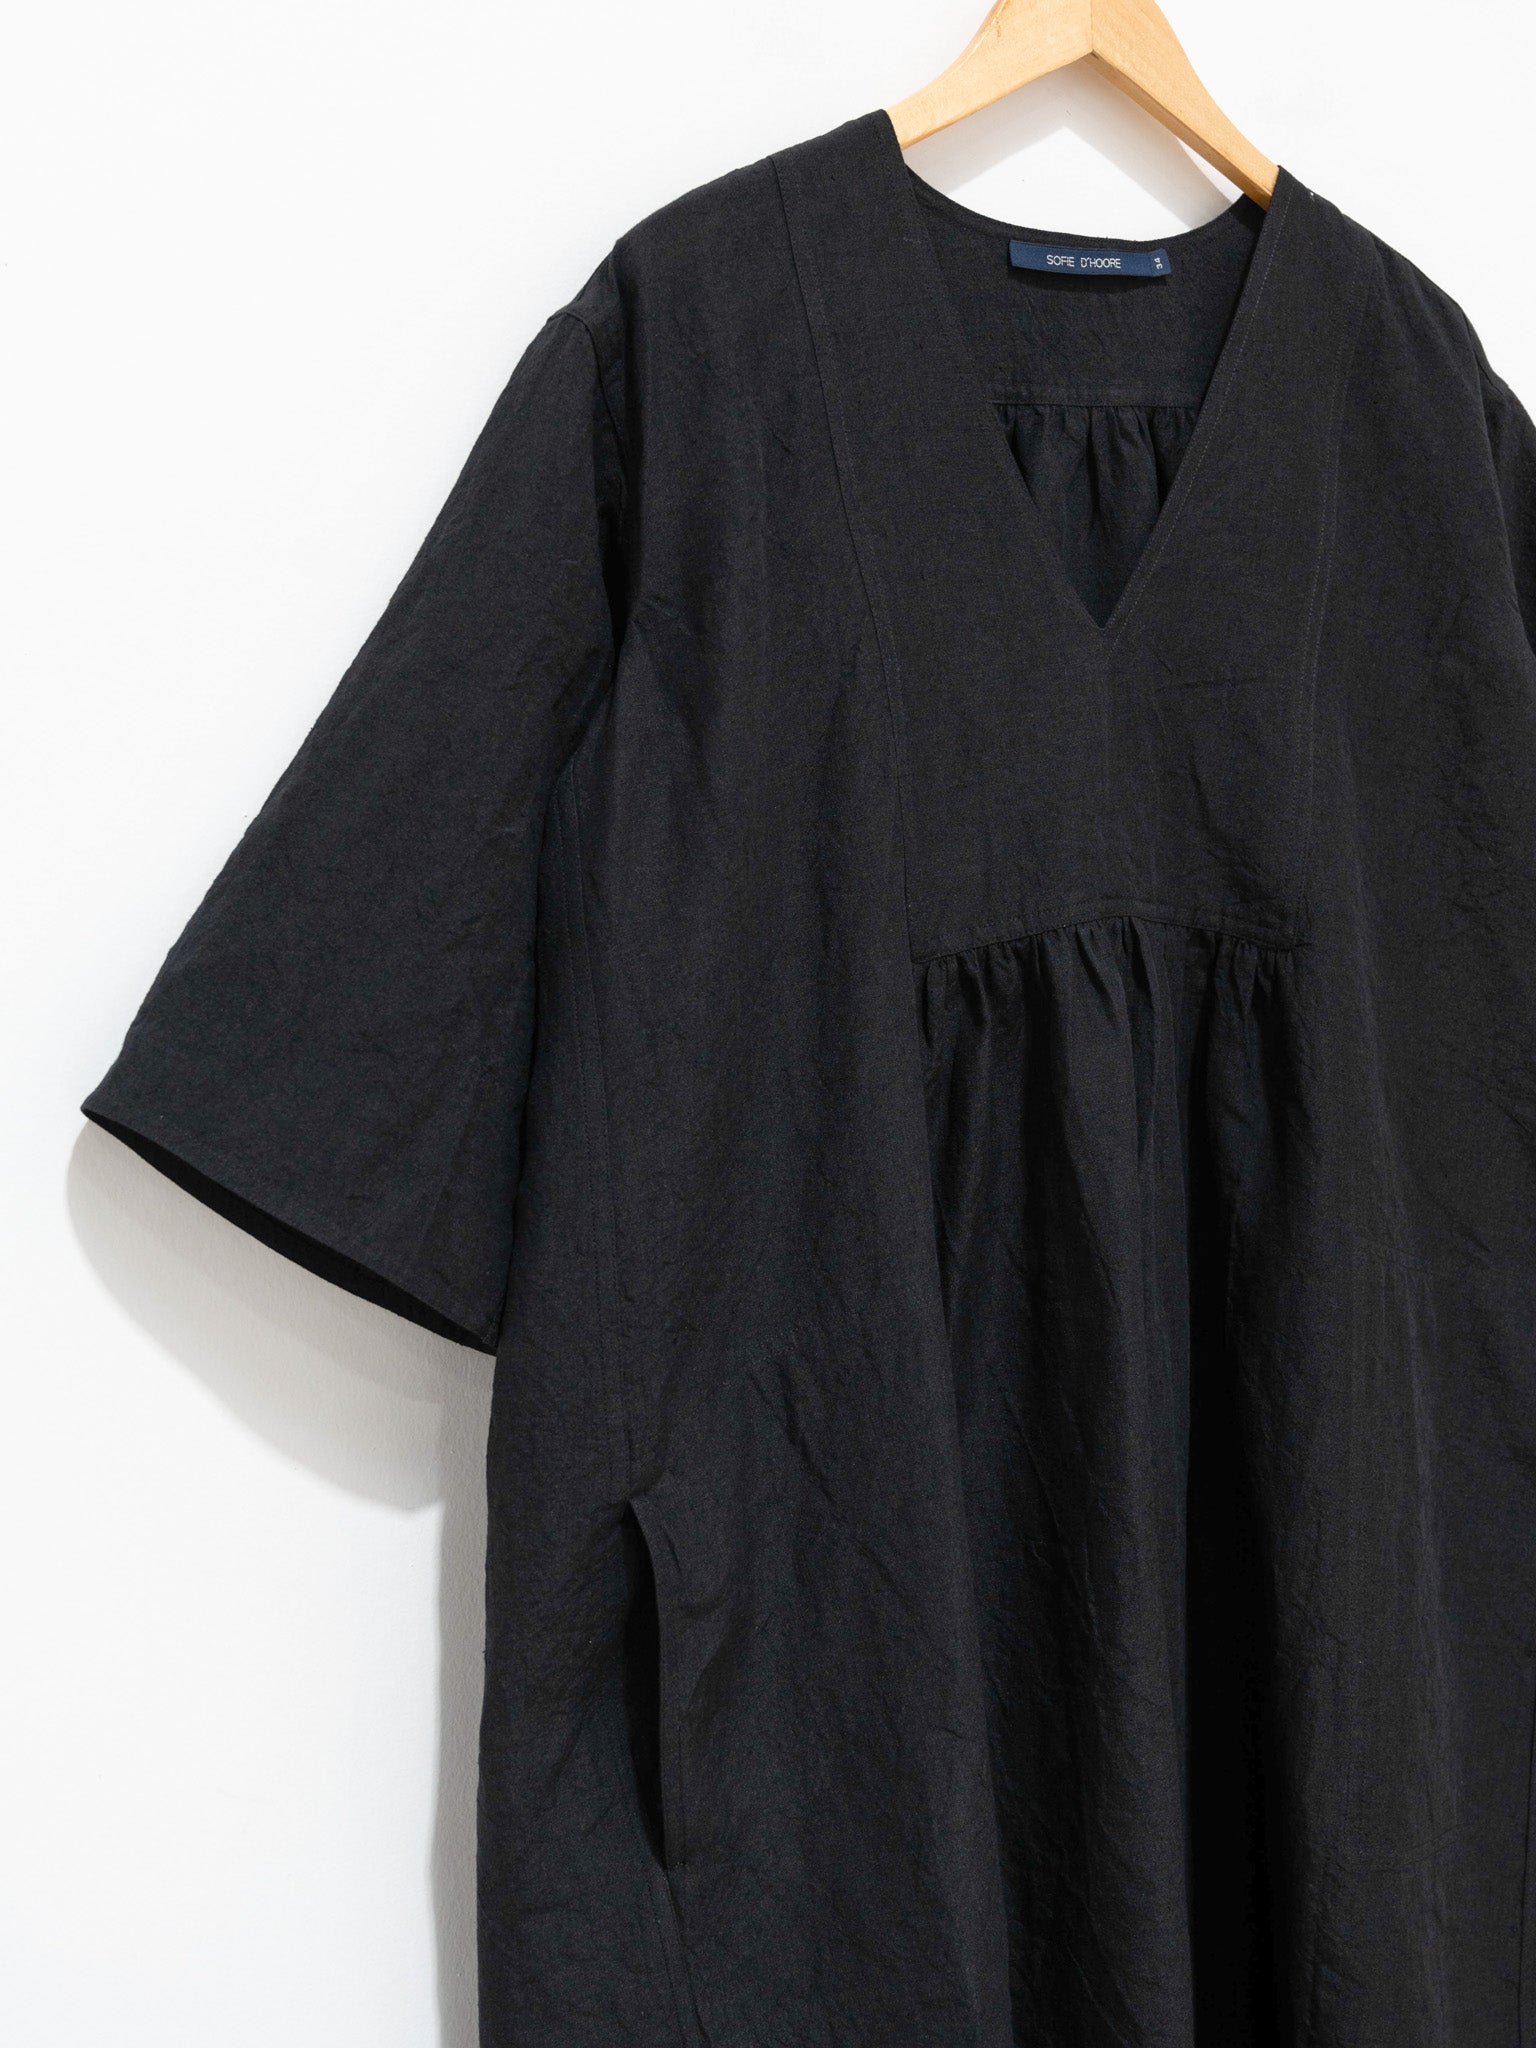 Namu Shop - Sofie D'Hoore Doralynn Linen Dress - Black